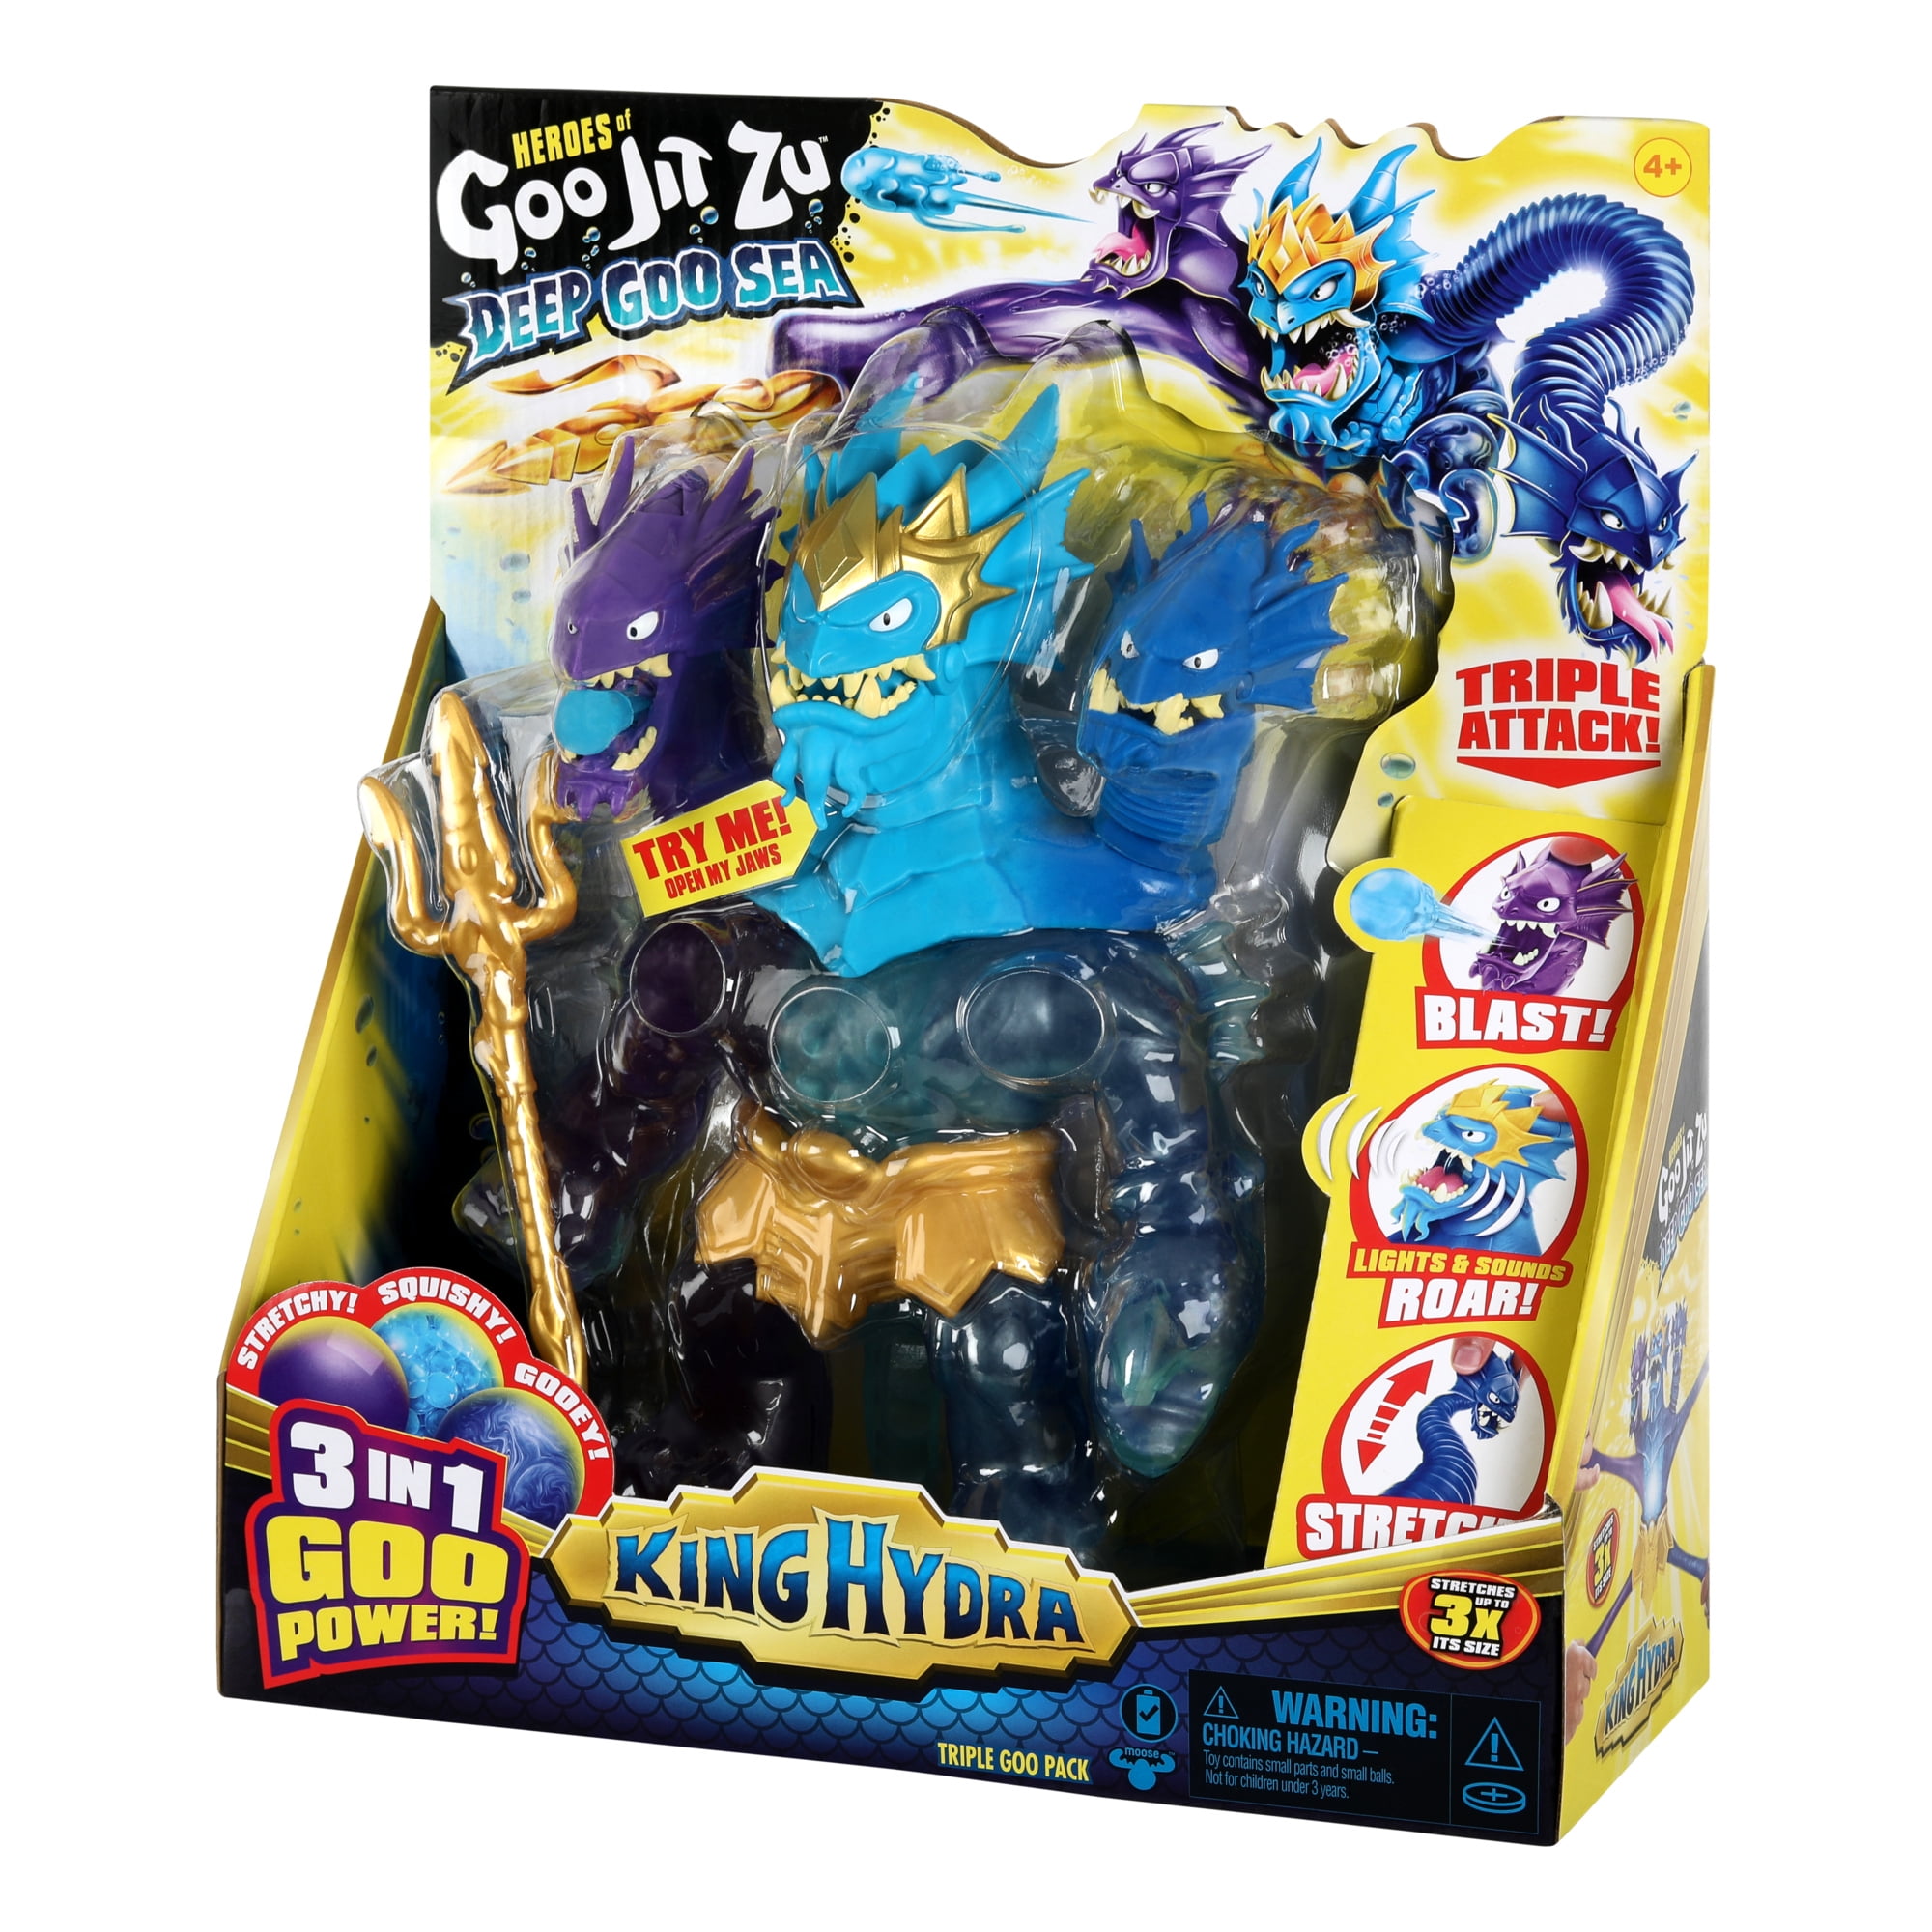 What's Inside 13 Heroes of Goo Jit Zu Deep Sea Goo Including King Hydra  AdventureFun Toy review! 